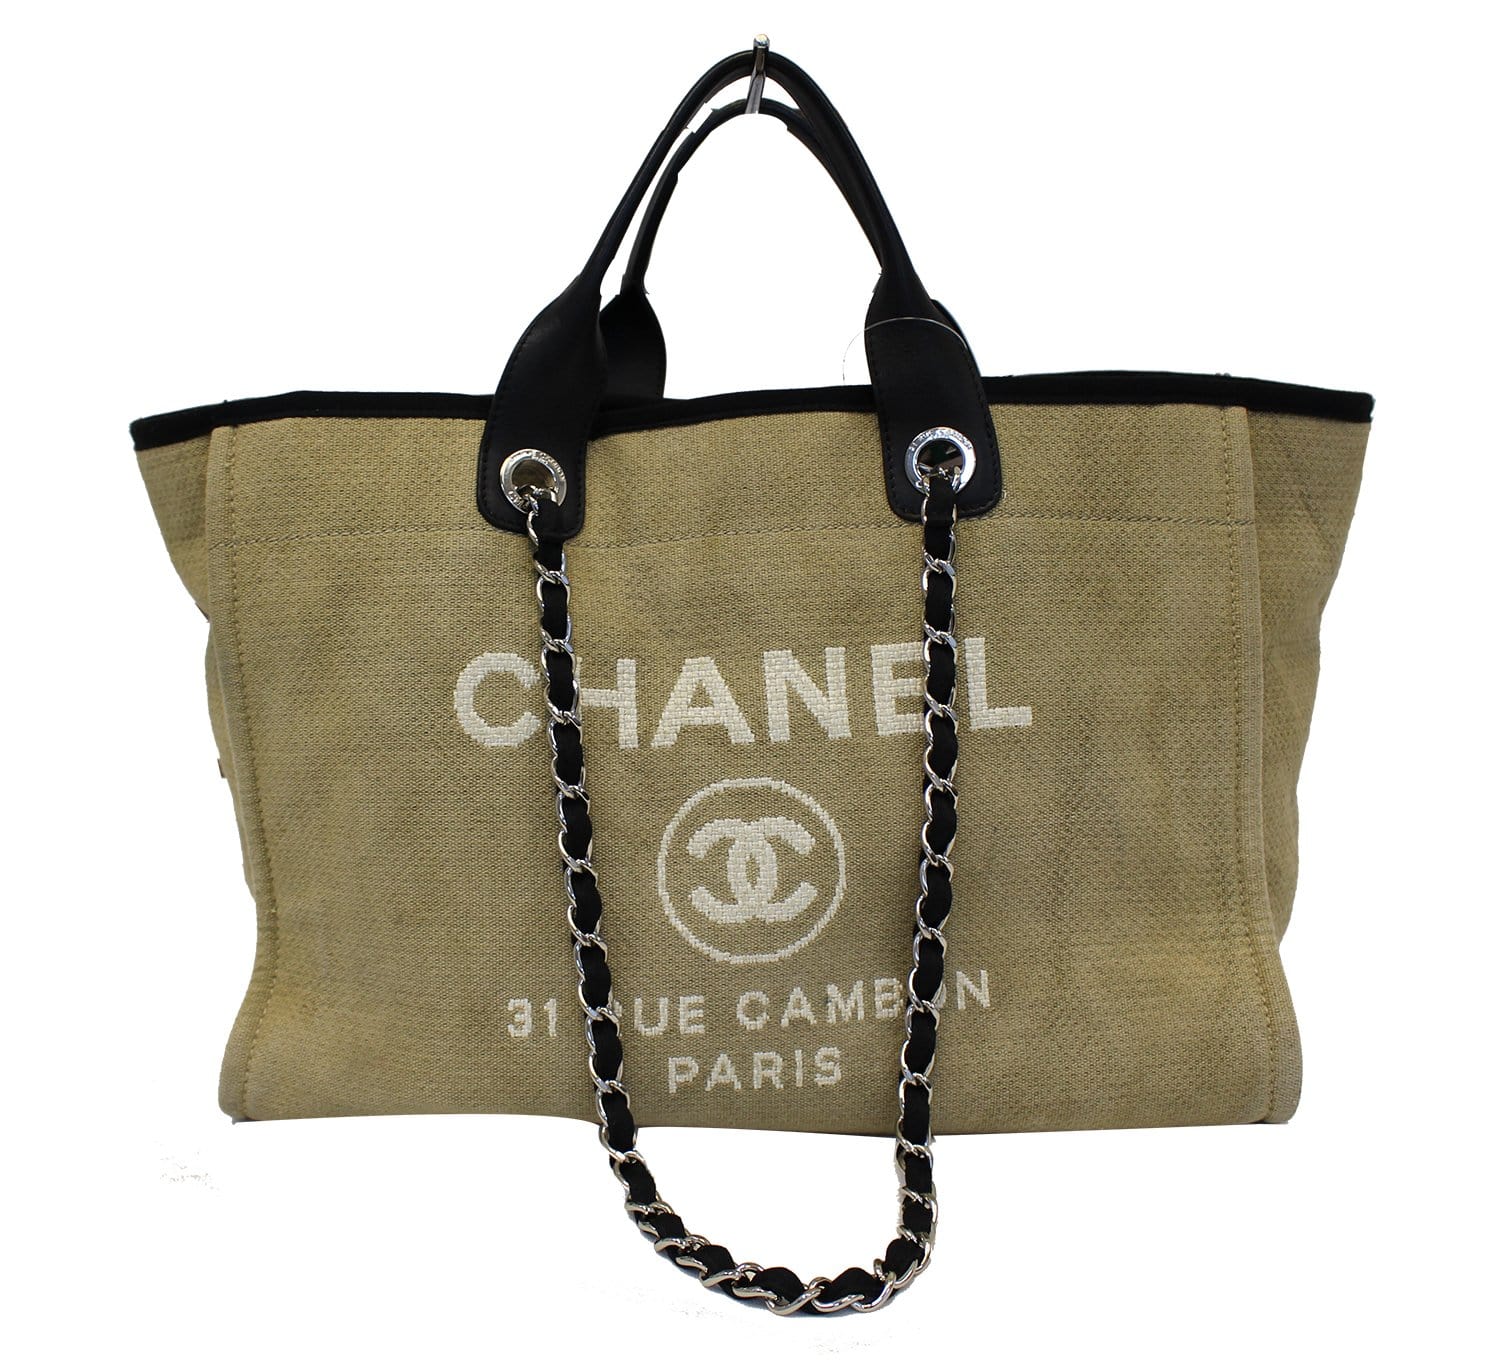 Chanel 'Deauville' Tote Bag in Sandcolor Jacquard - Chanel